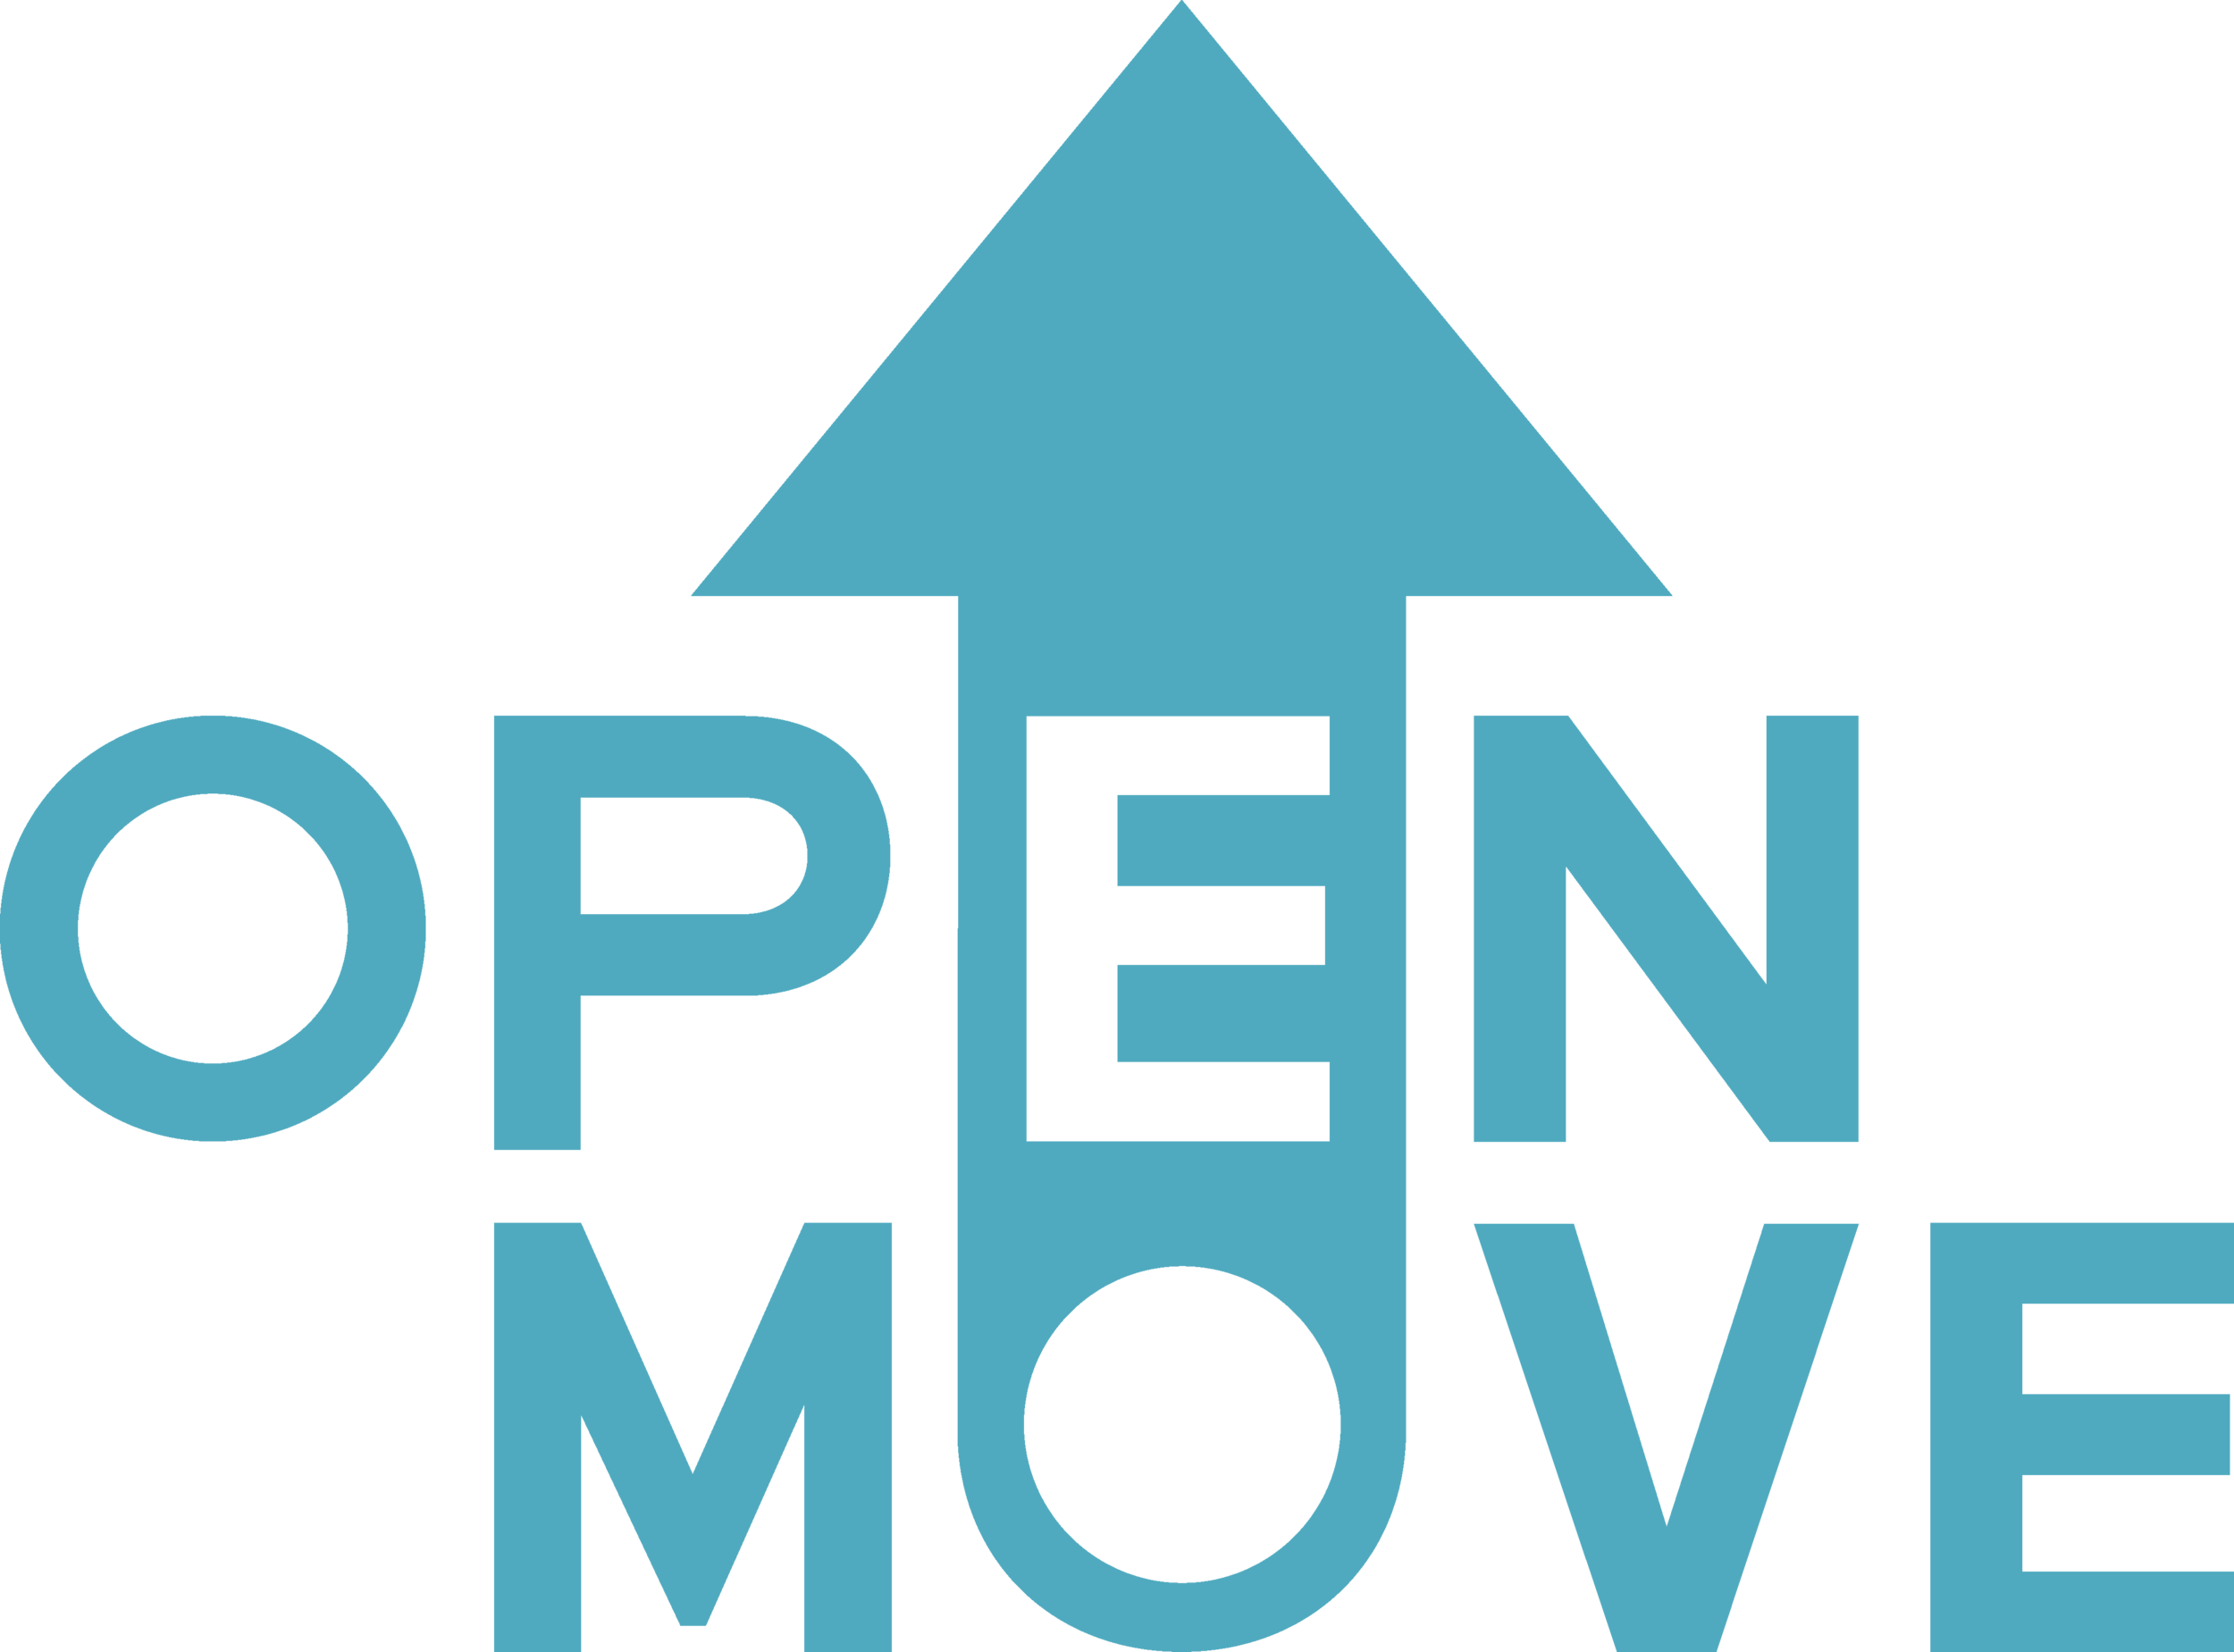 OpenMove logo.png